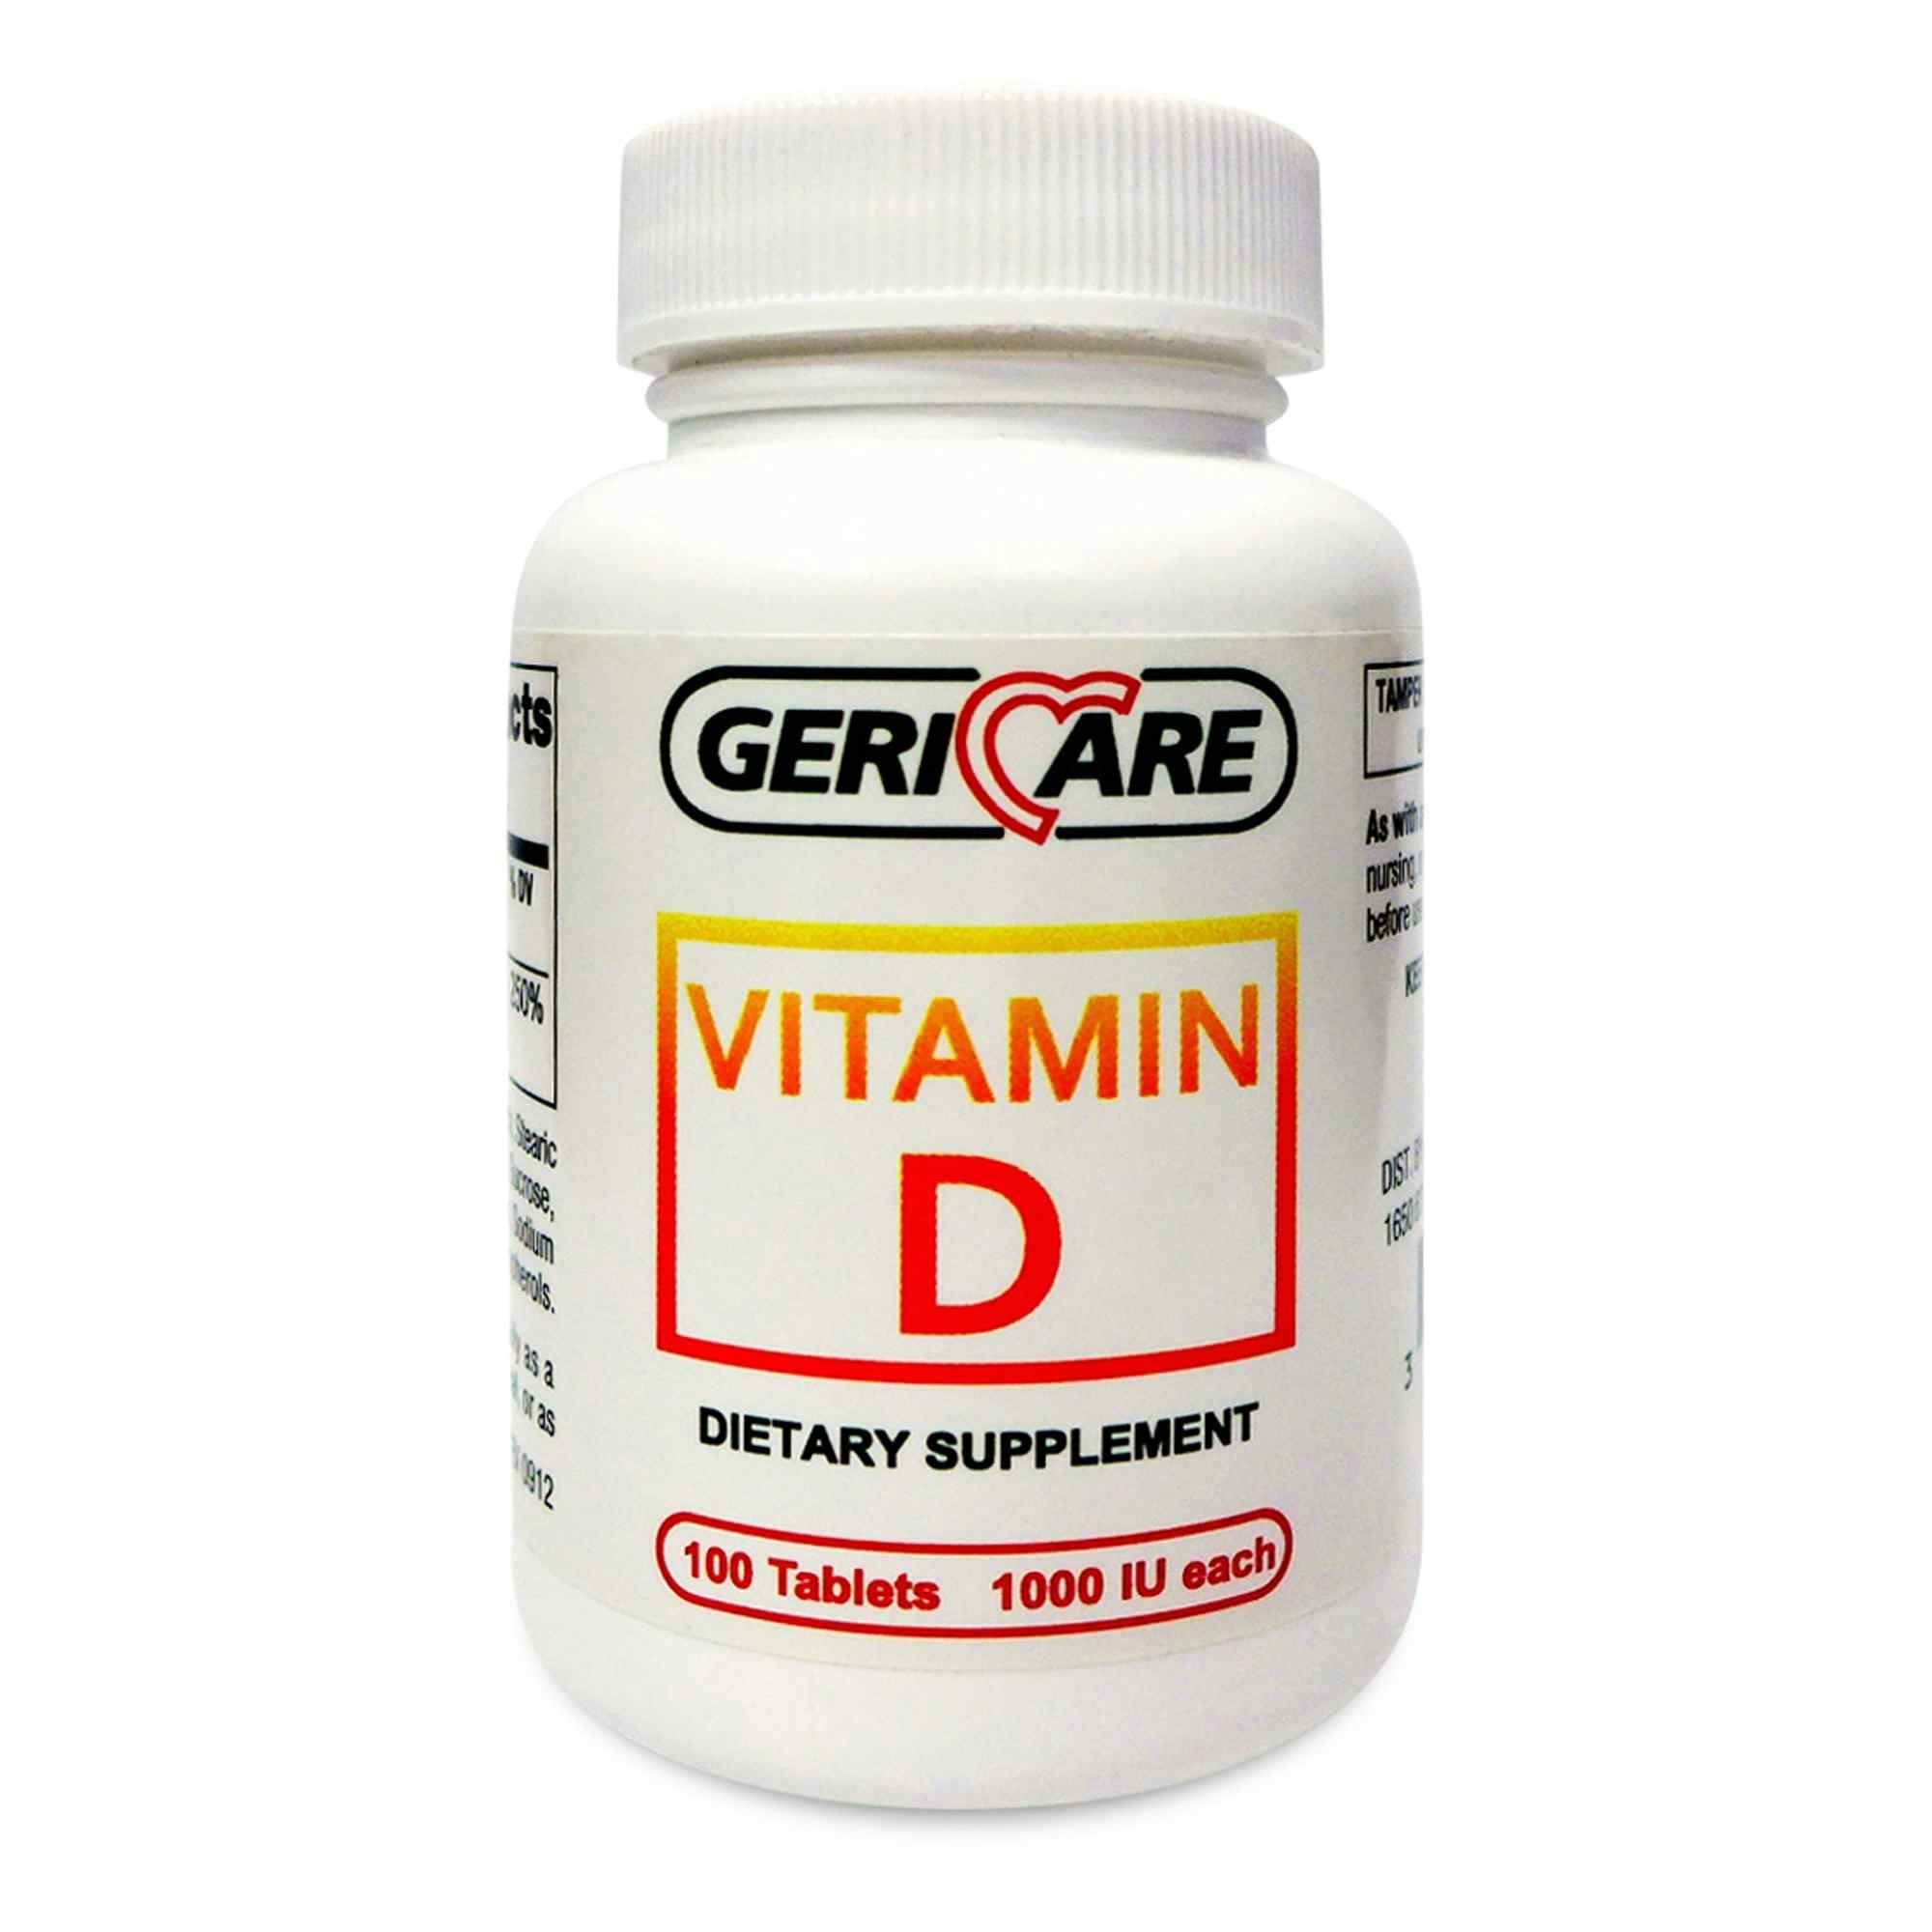 Geri-Care Vitamin D3 Tablets, 1000 IU Strength, 100 Per Bottle, 876-01-GCP, 1 Box